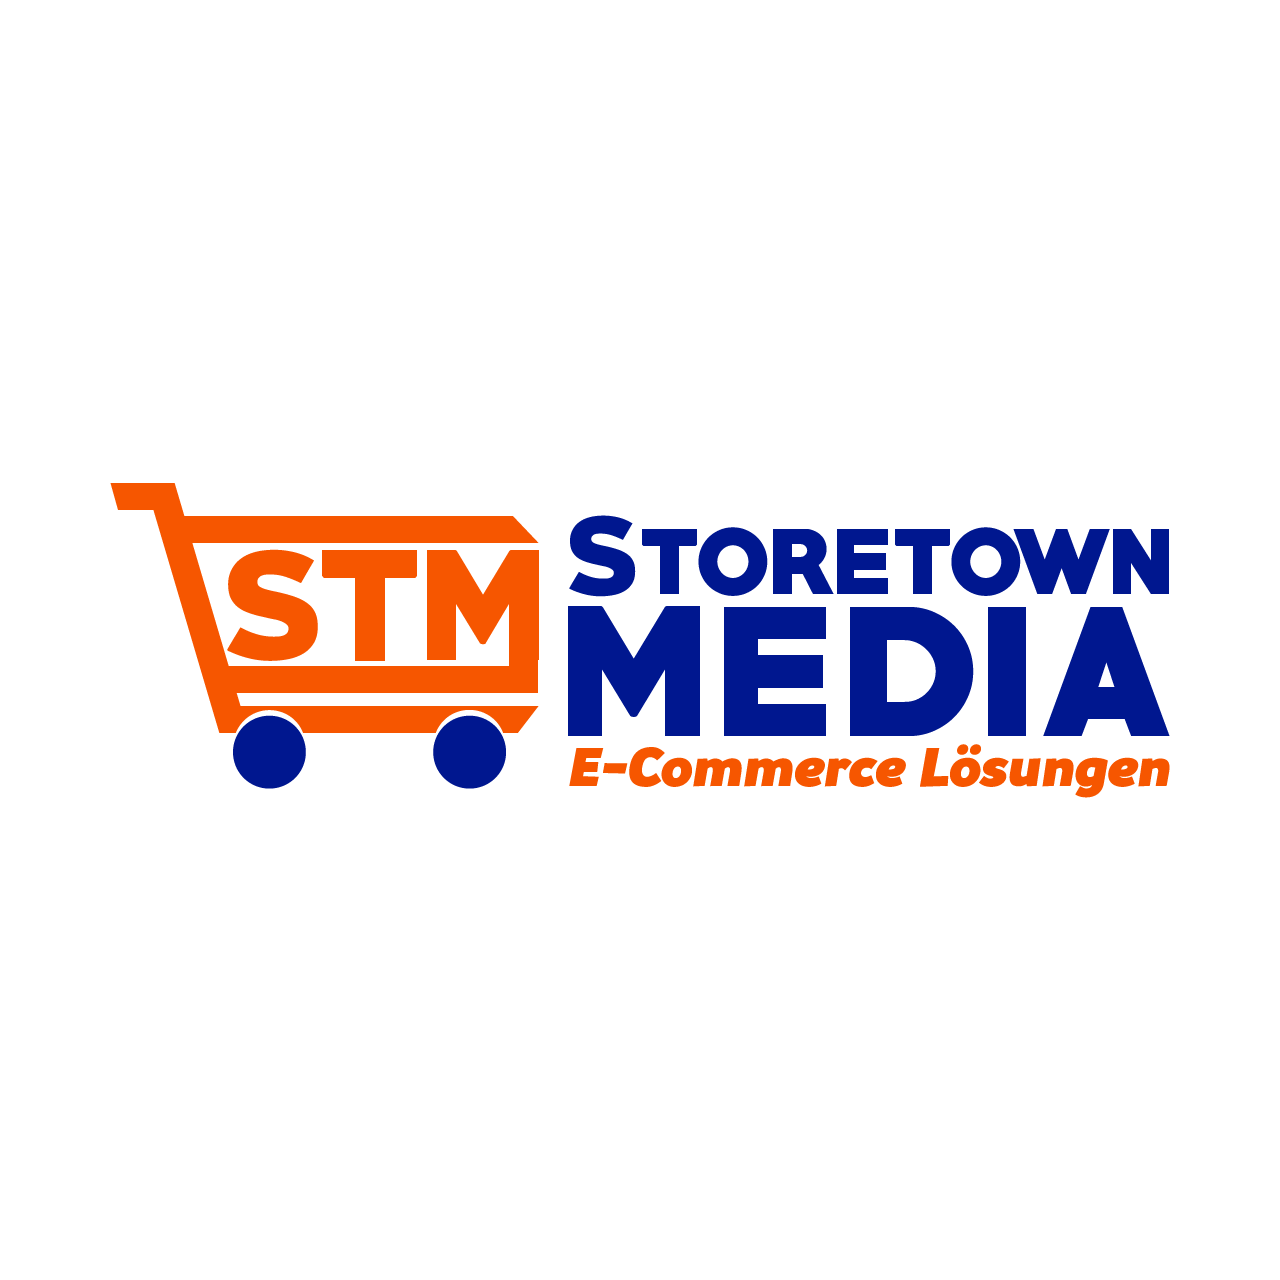 Storetown-Media in Tornesch - Logo